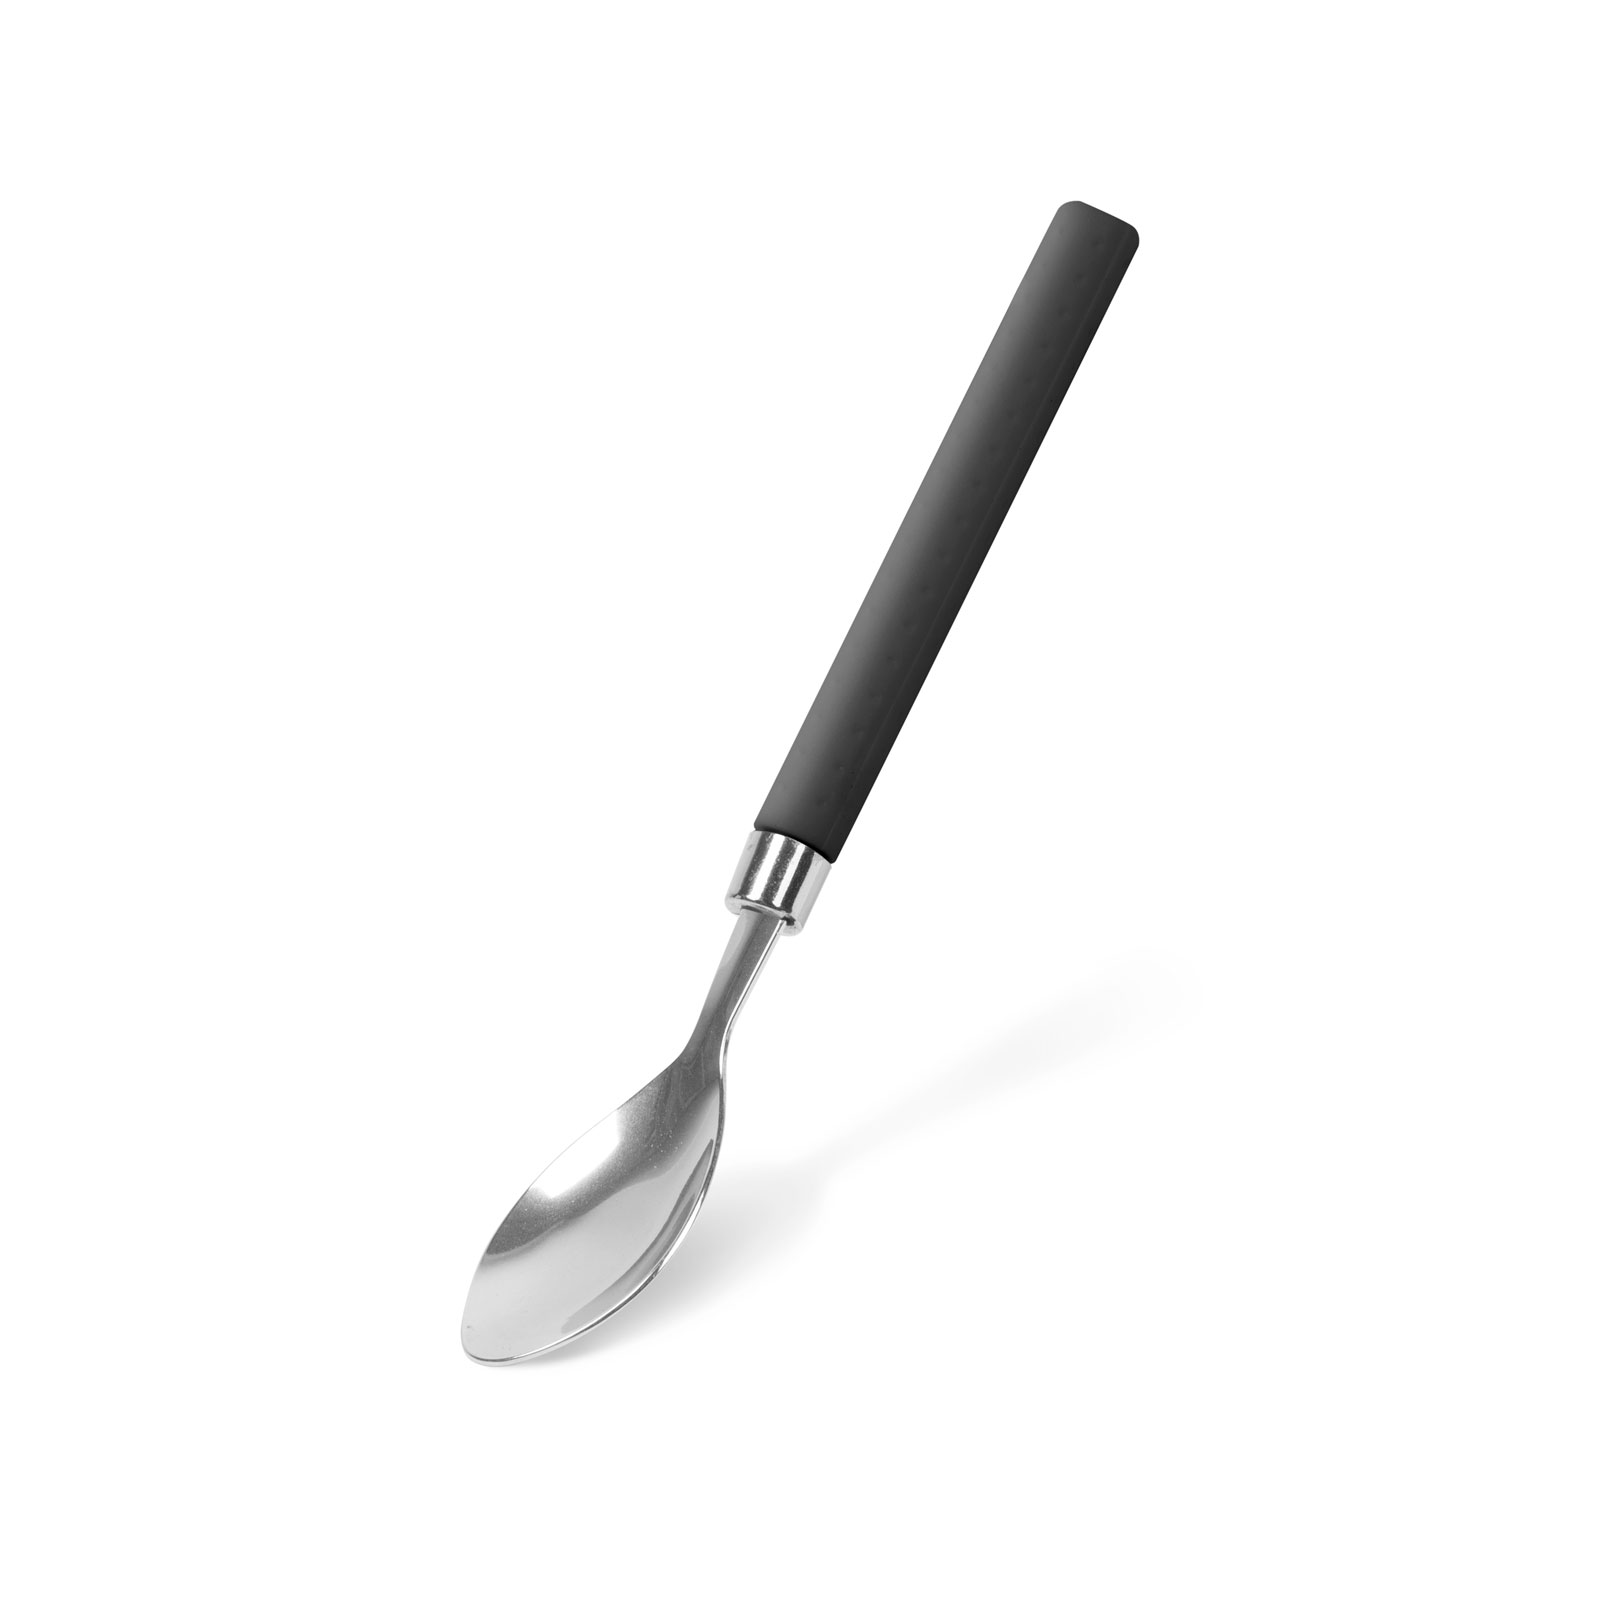 Cutlery set - black - 4 pcs- with plastic handle thumb